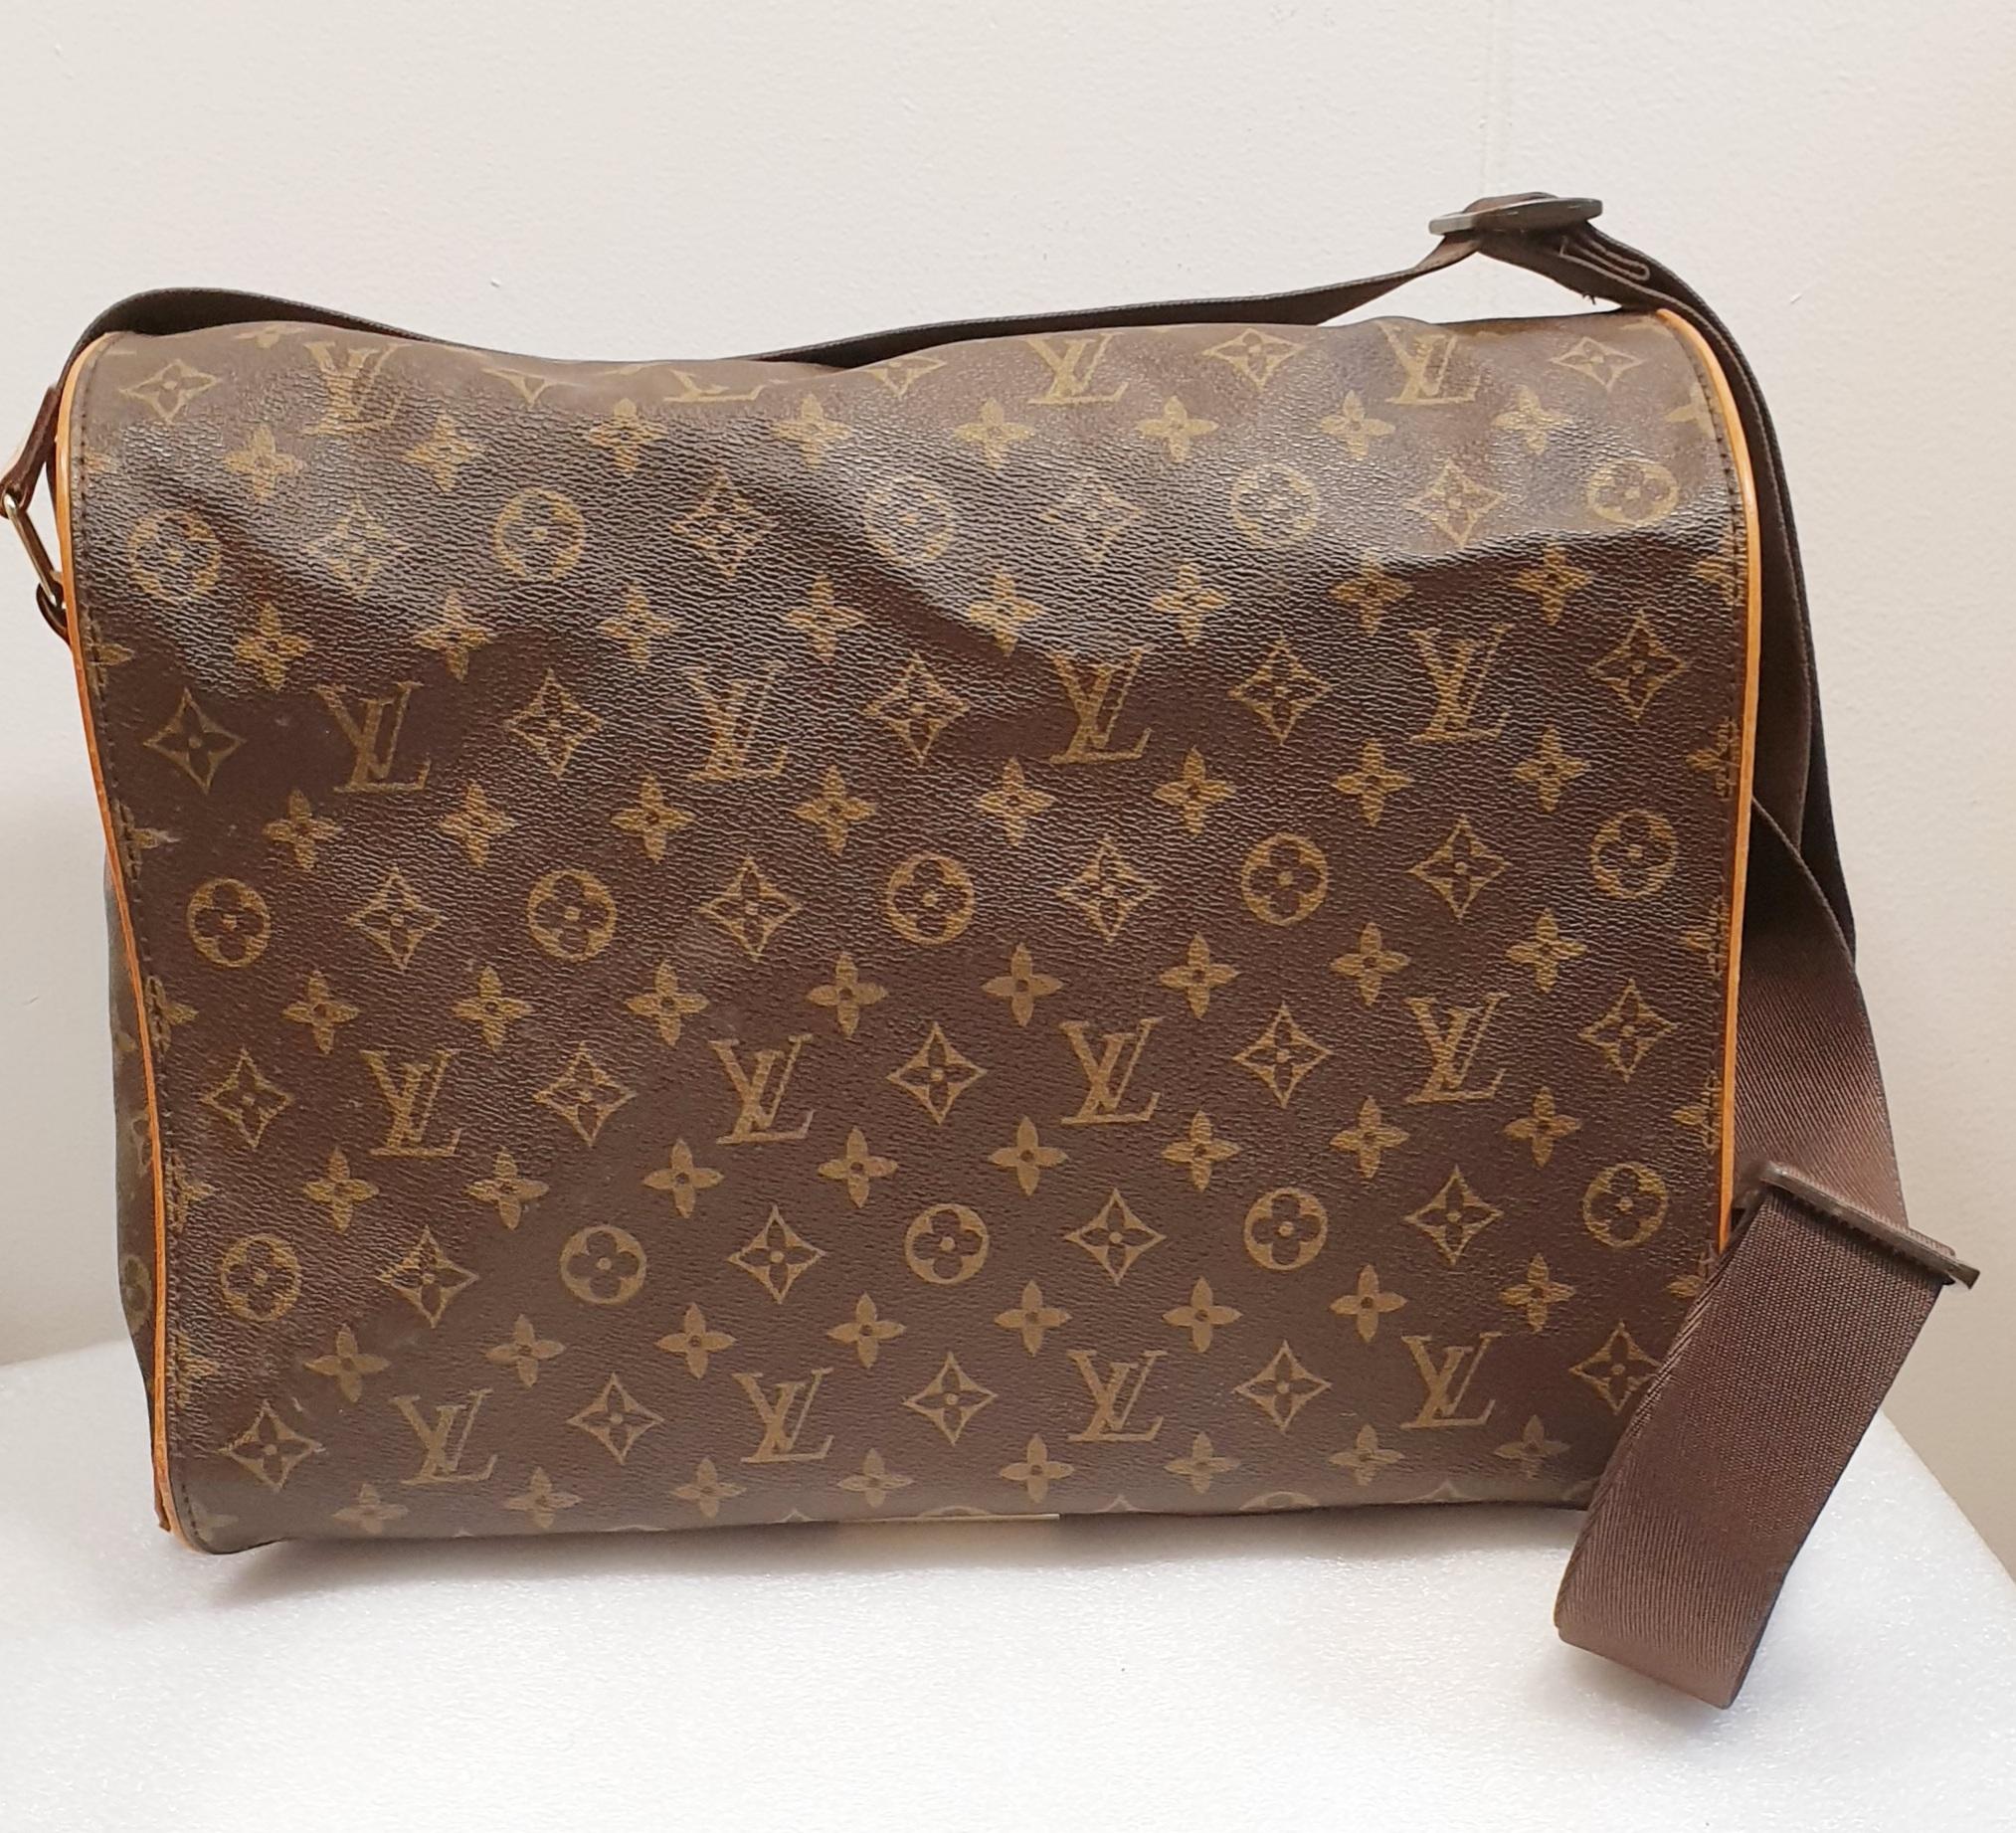 Vintage Louis Vuitton Supreme Handbags and Purses - 6 For Sale at 